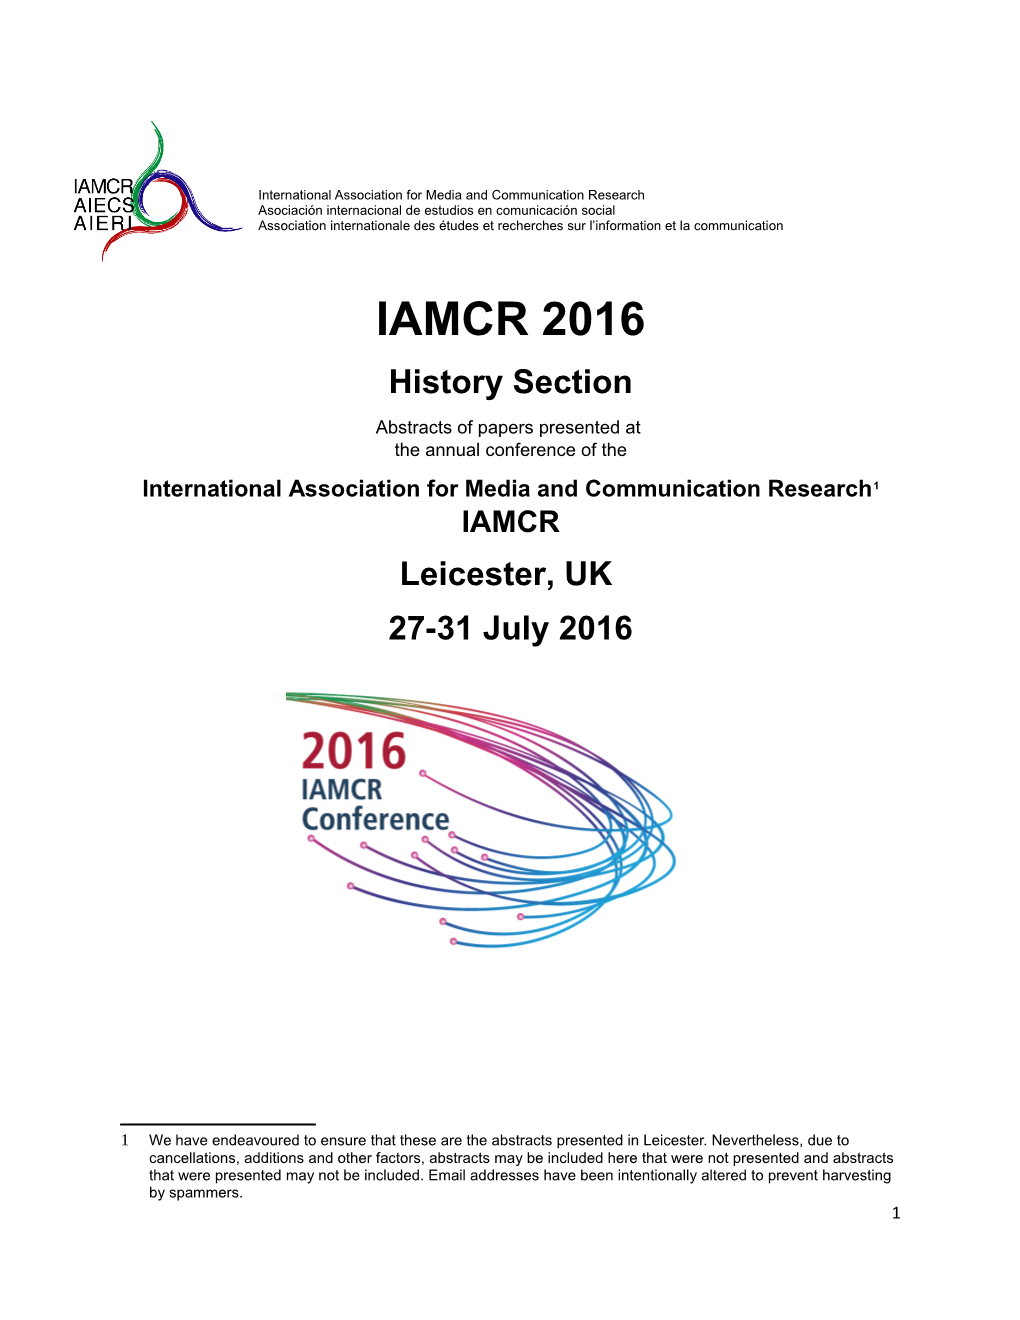 IAMCR 2016 History Section